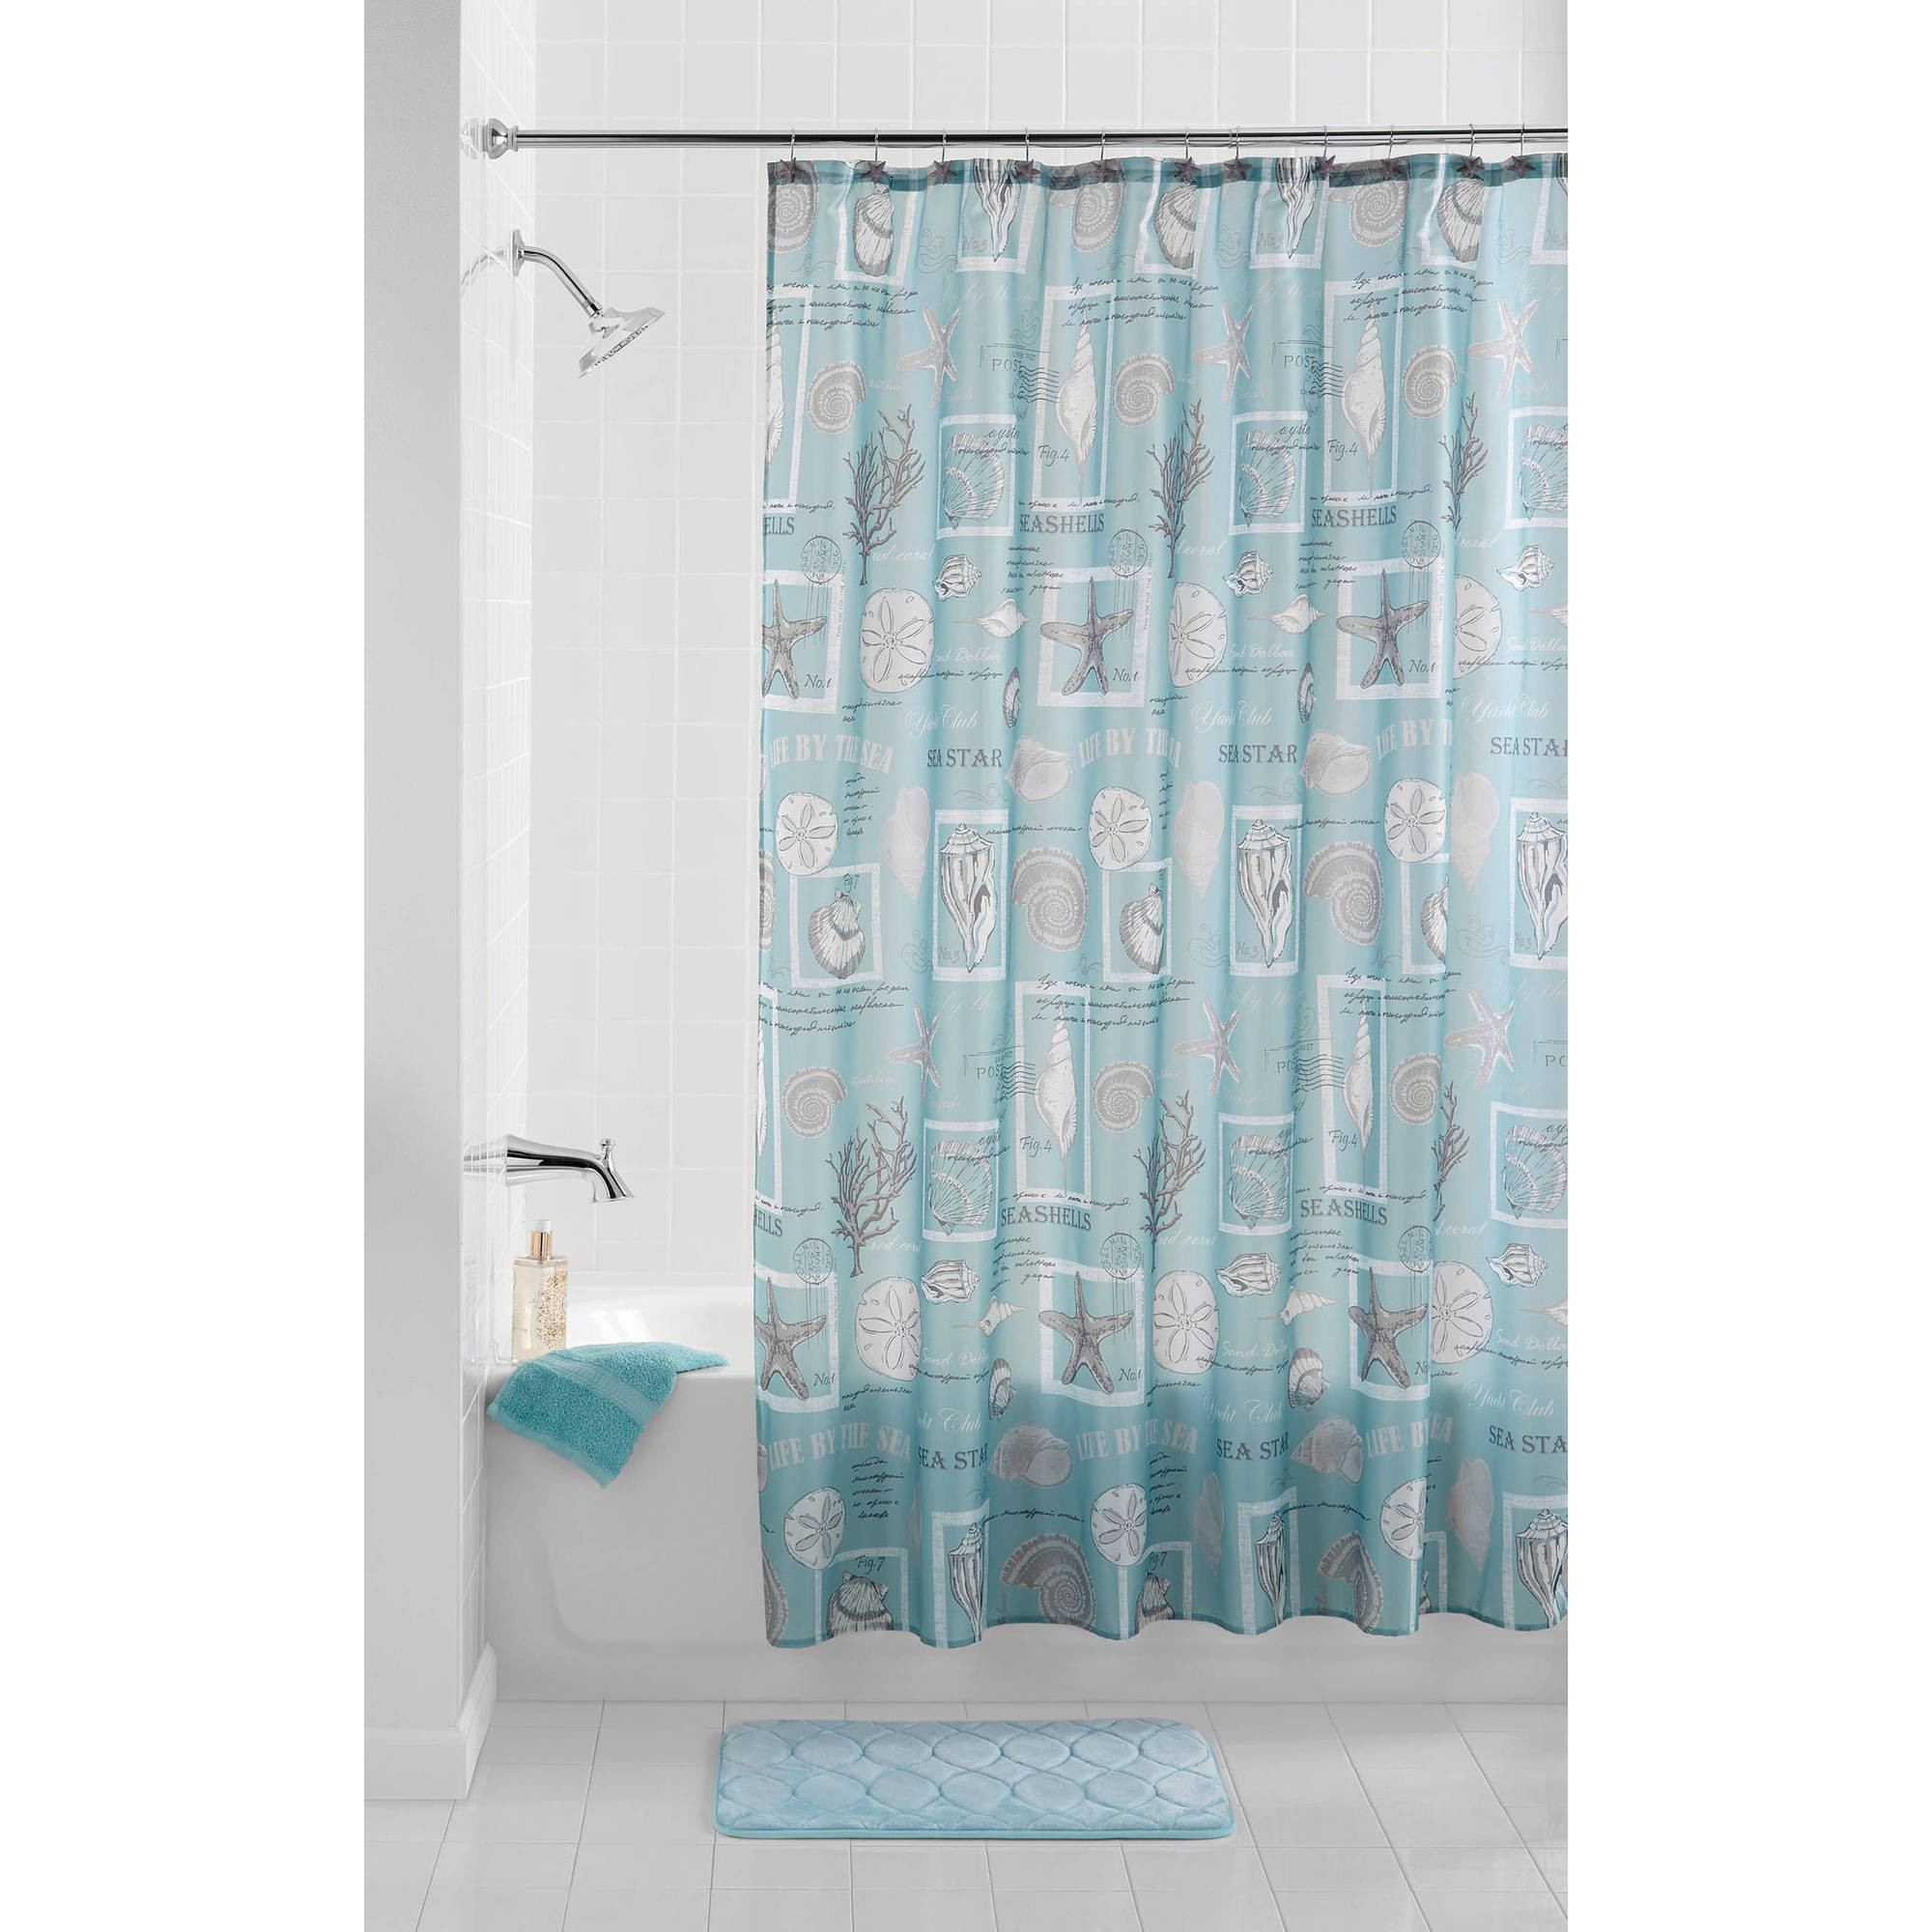 Walmart Bathroom Shower Curtain Sets
 Mainstays Coastal Aqua Shower Curtain Set with Shower